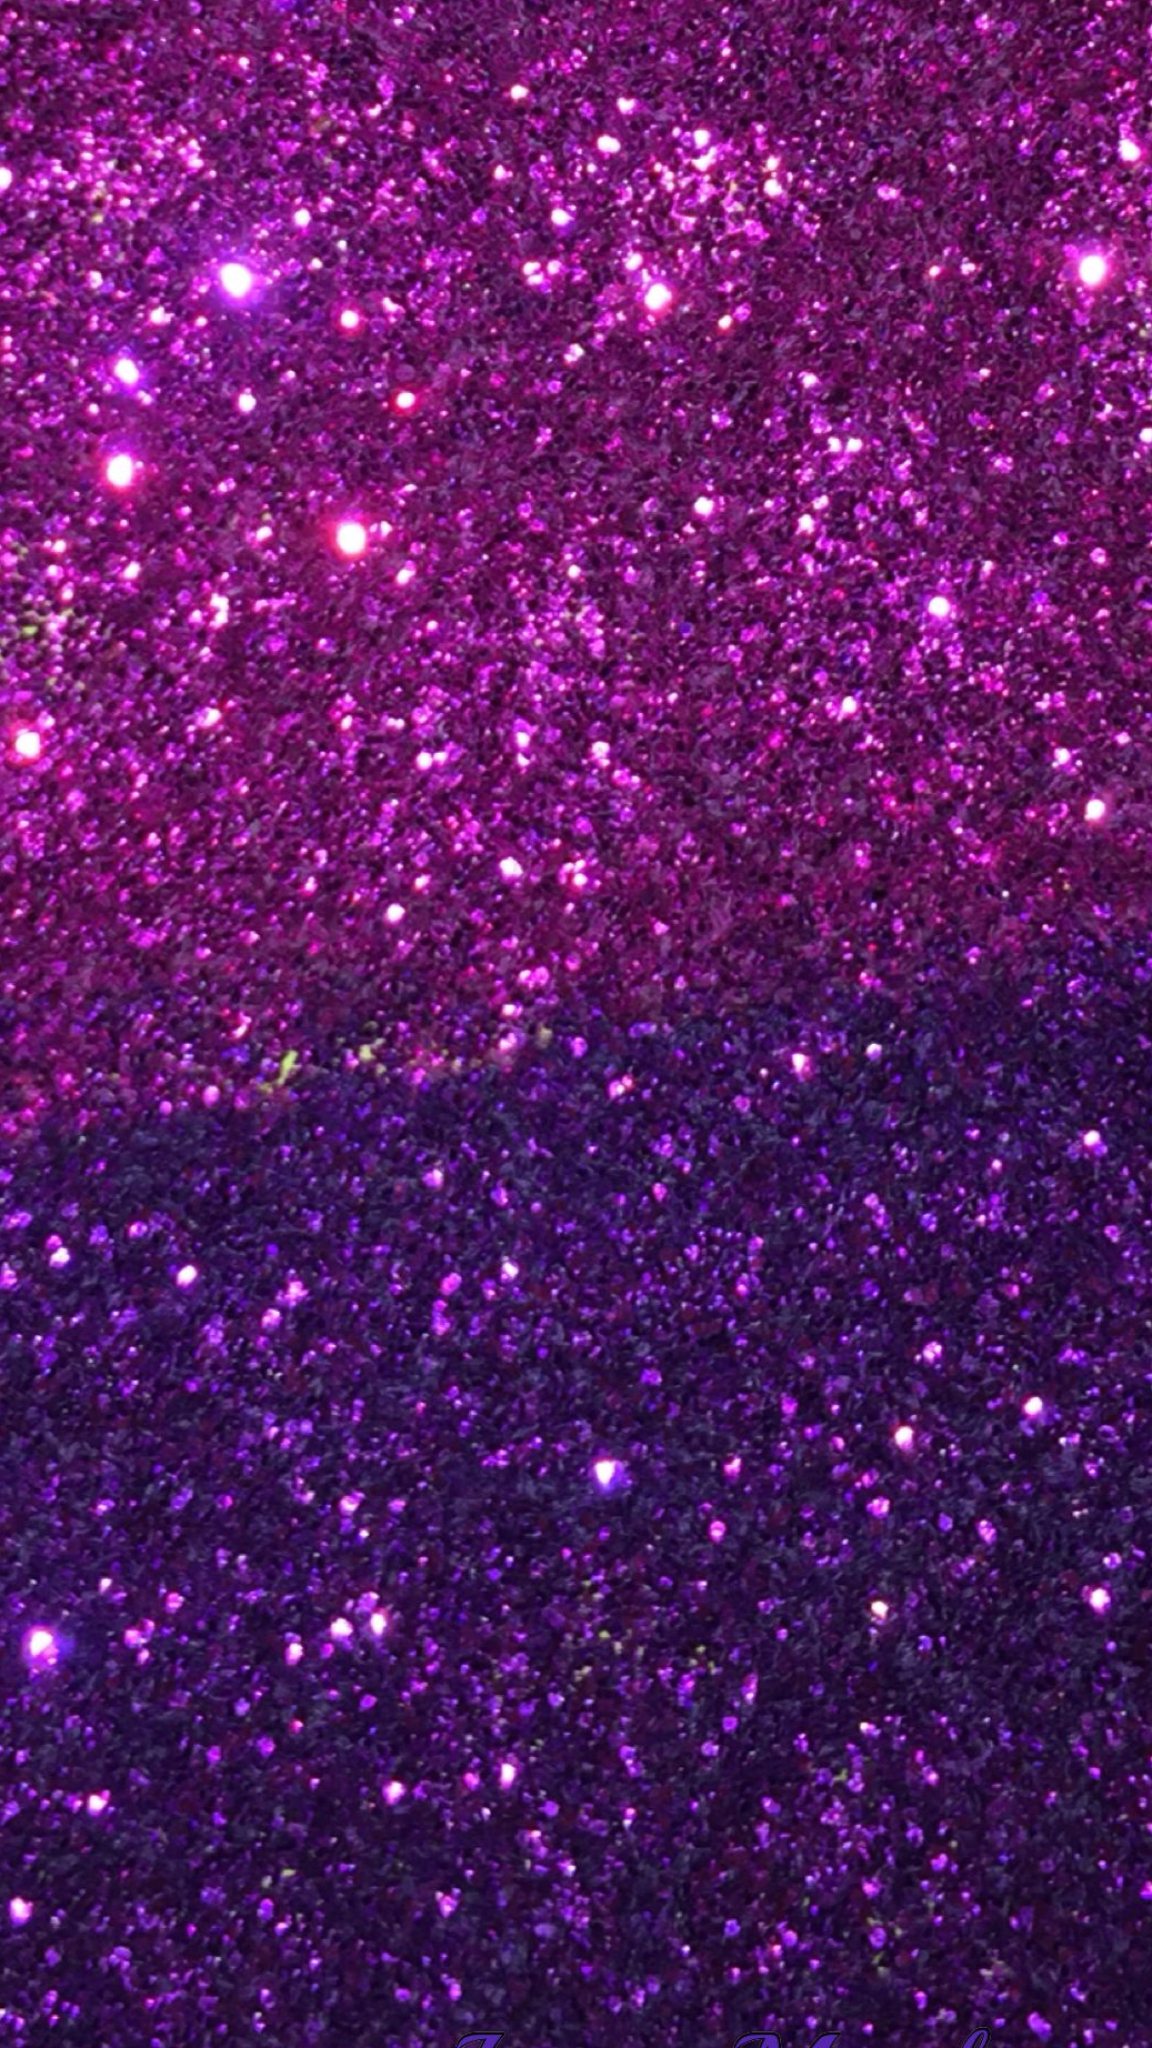 1152x2048 Pink and purple glitter wallpaper sparkle background colorful two tone pretty | Purple glitter wallpaper, Pink glitter wallpaper, Sparkles background